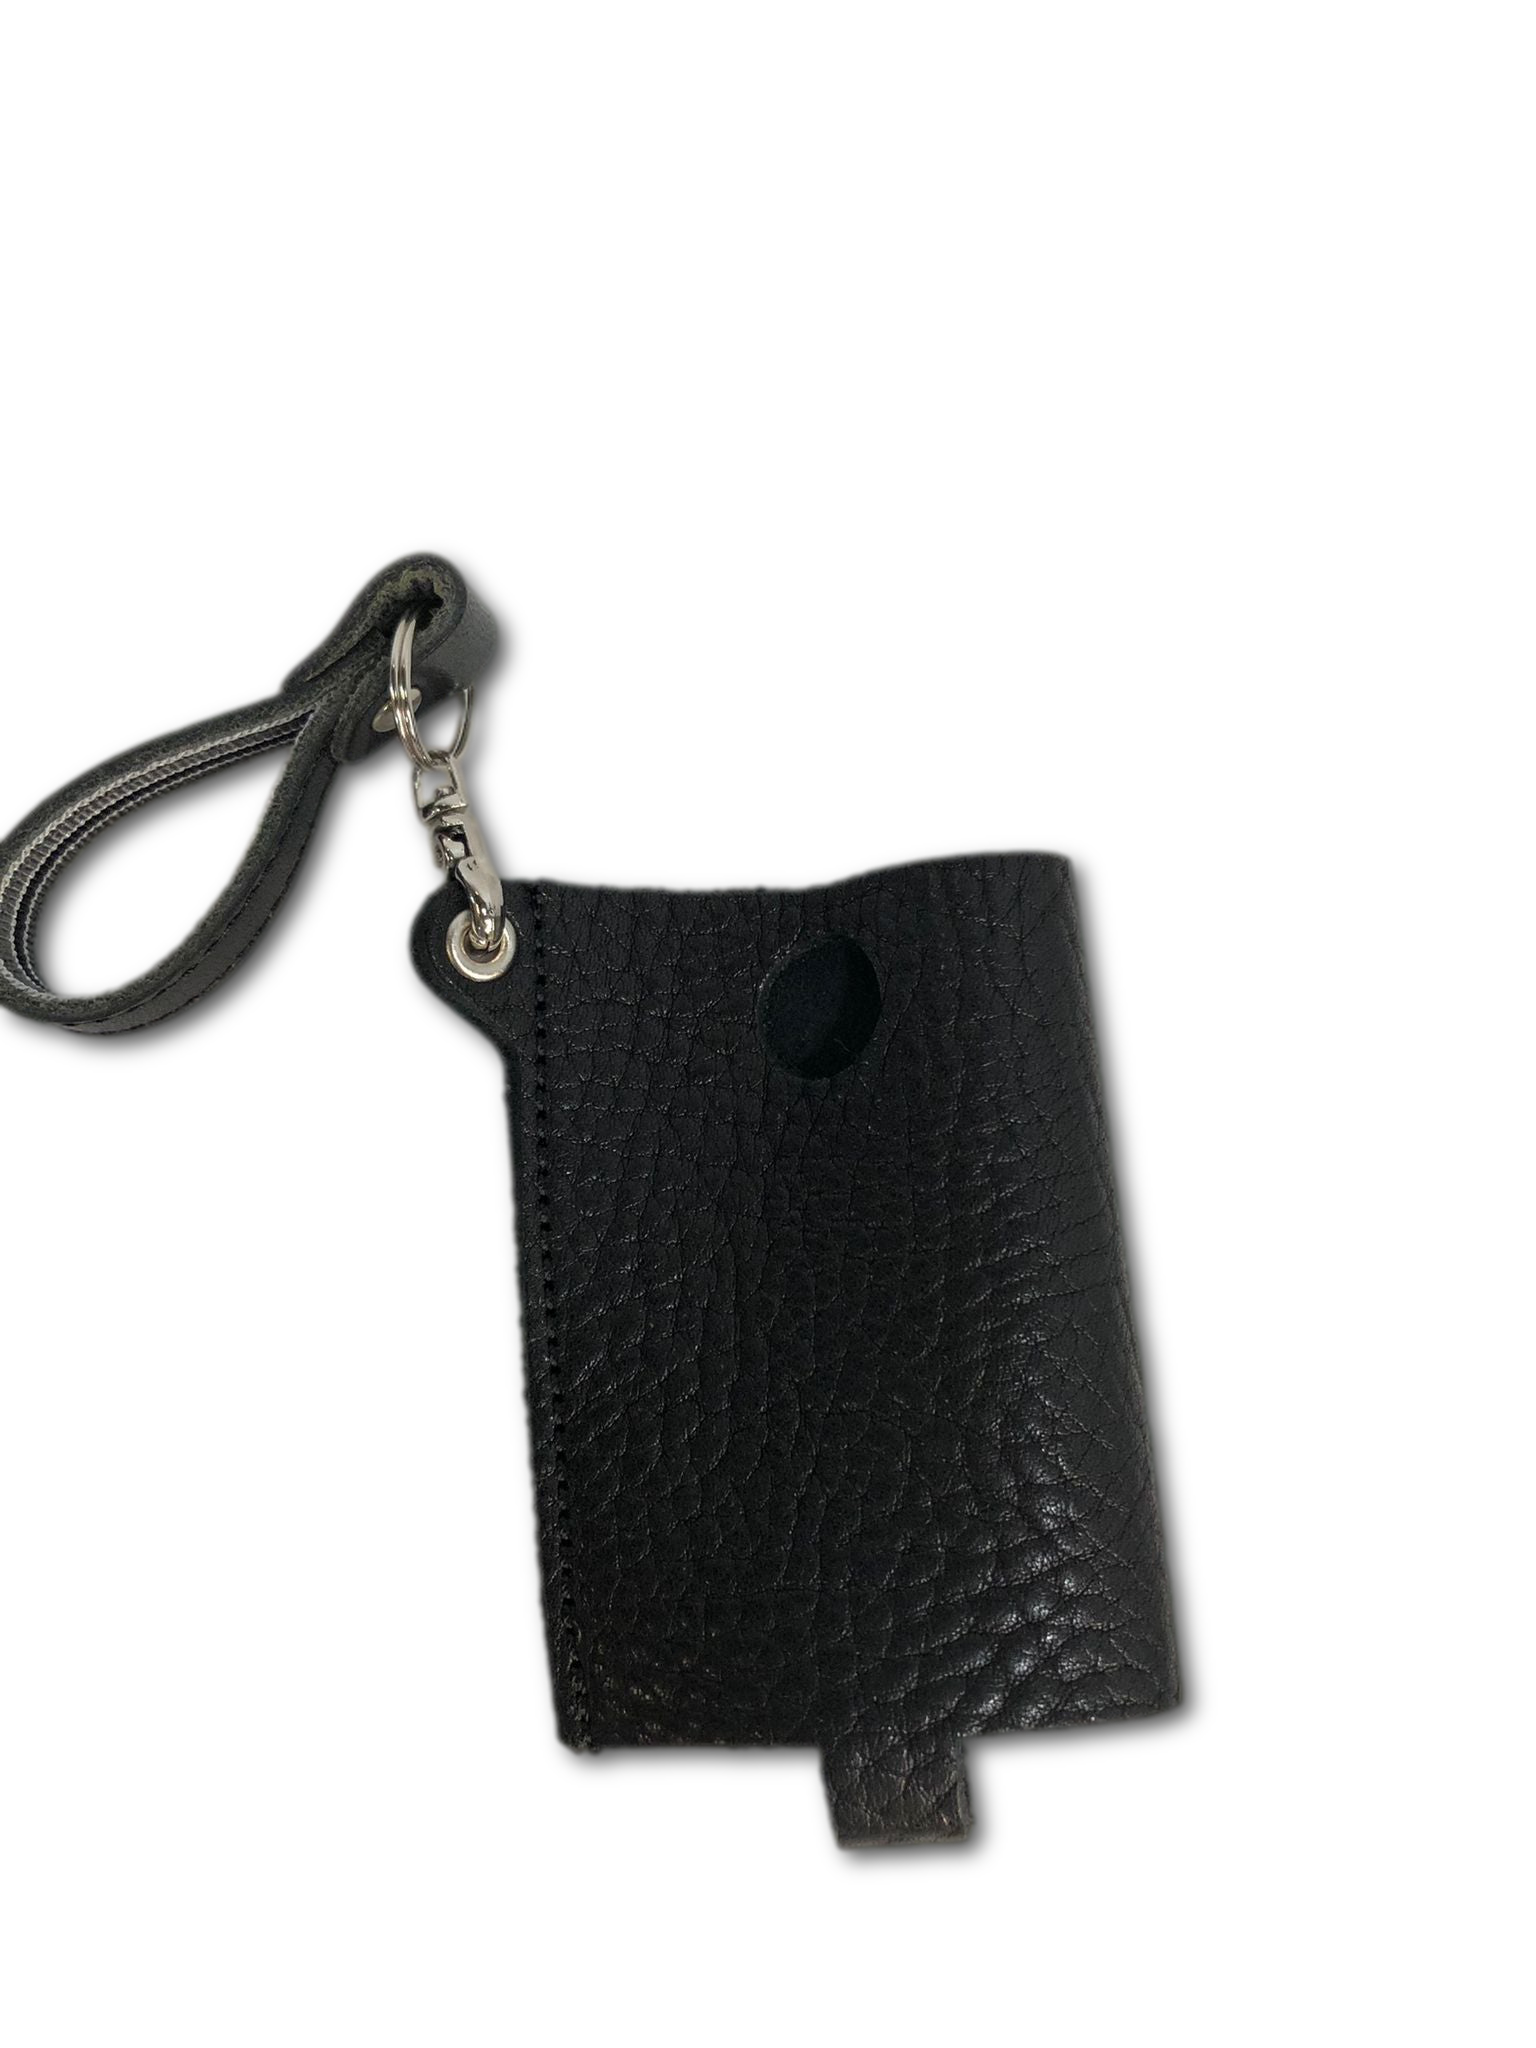 Naniwa Leather Himeji Leather Glow case glo Cover, black, One size